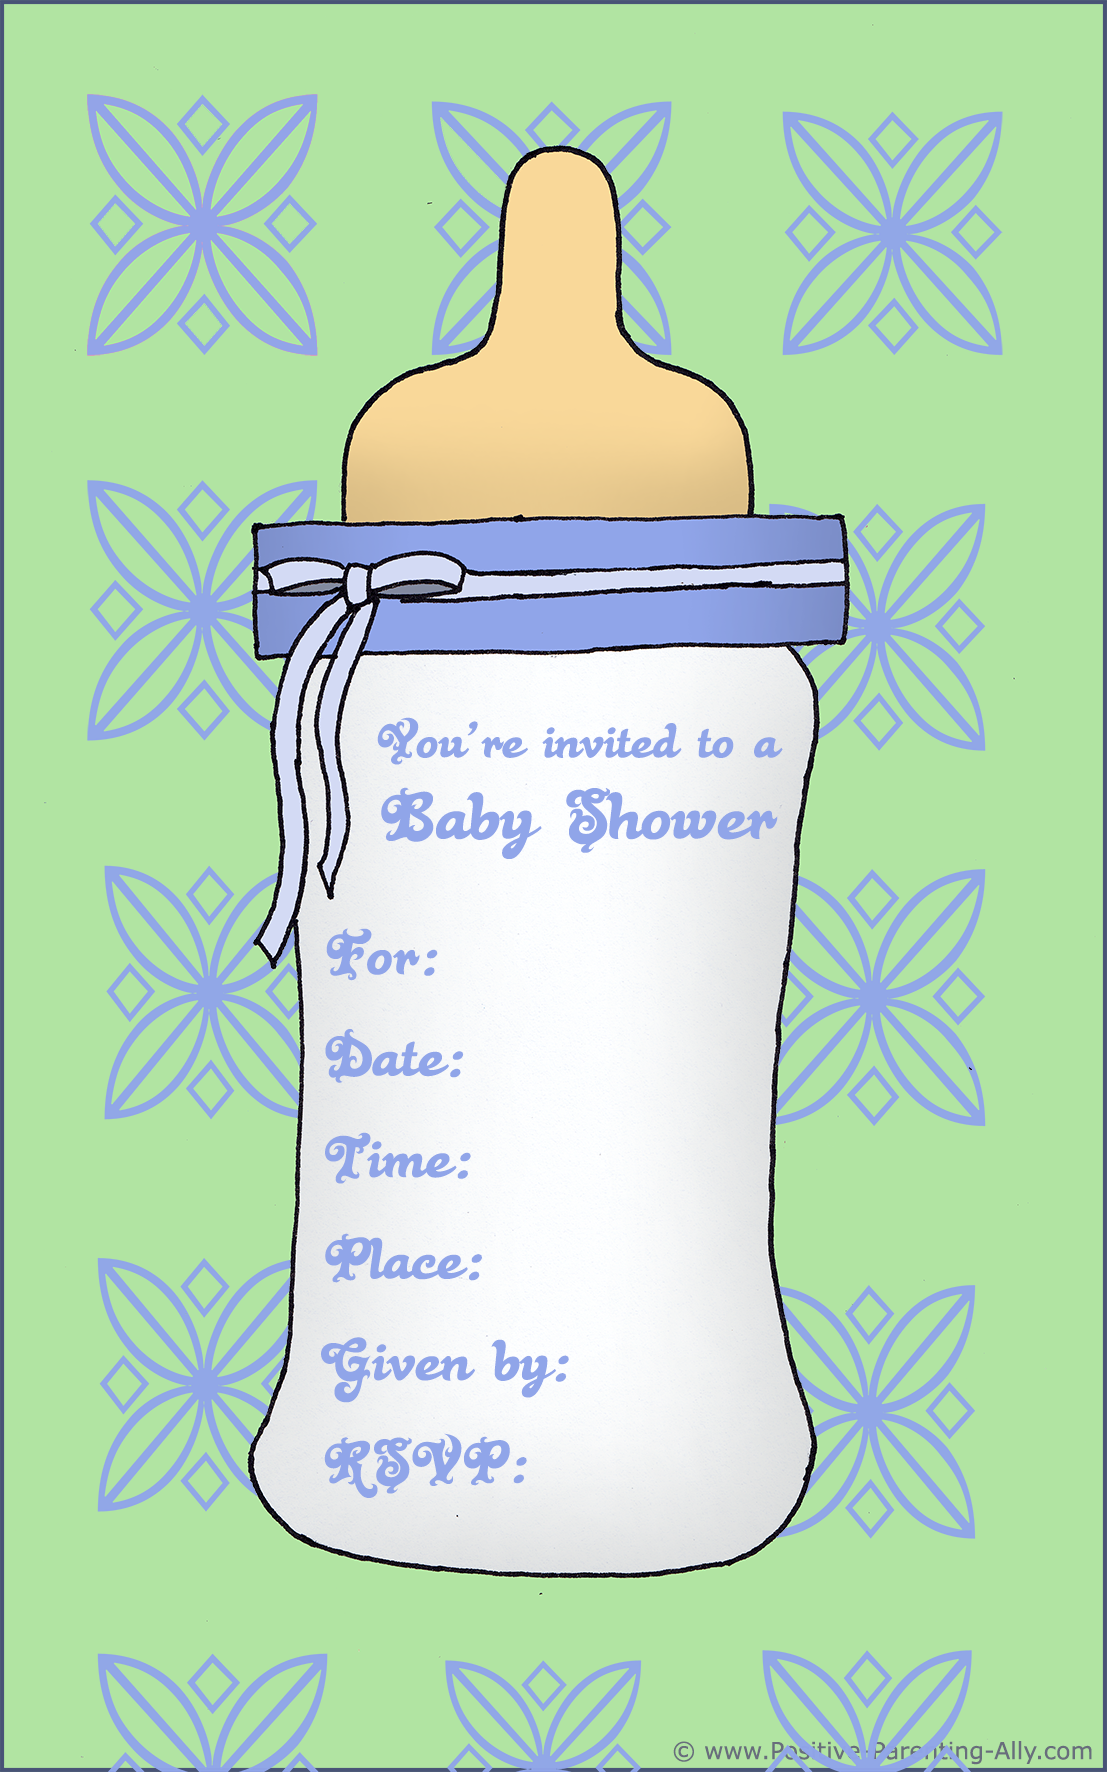 baby-shower-cake-pops-baby-shower-cakes-for-boys-baby-shower-favors